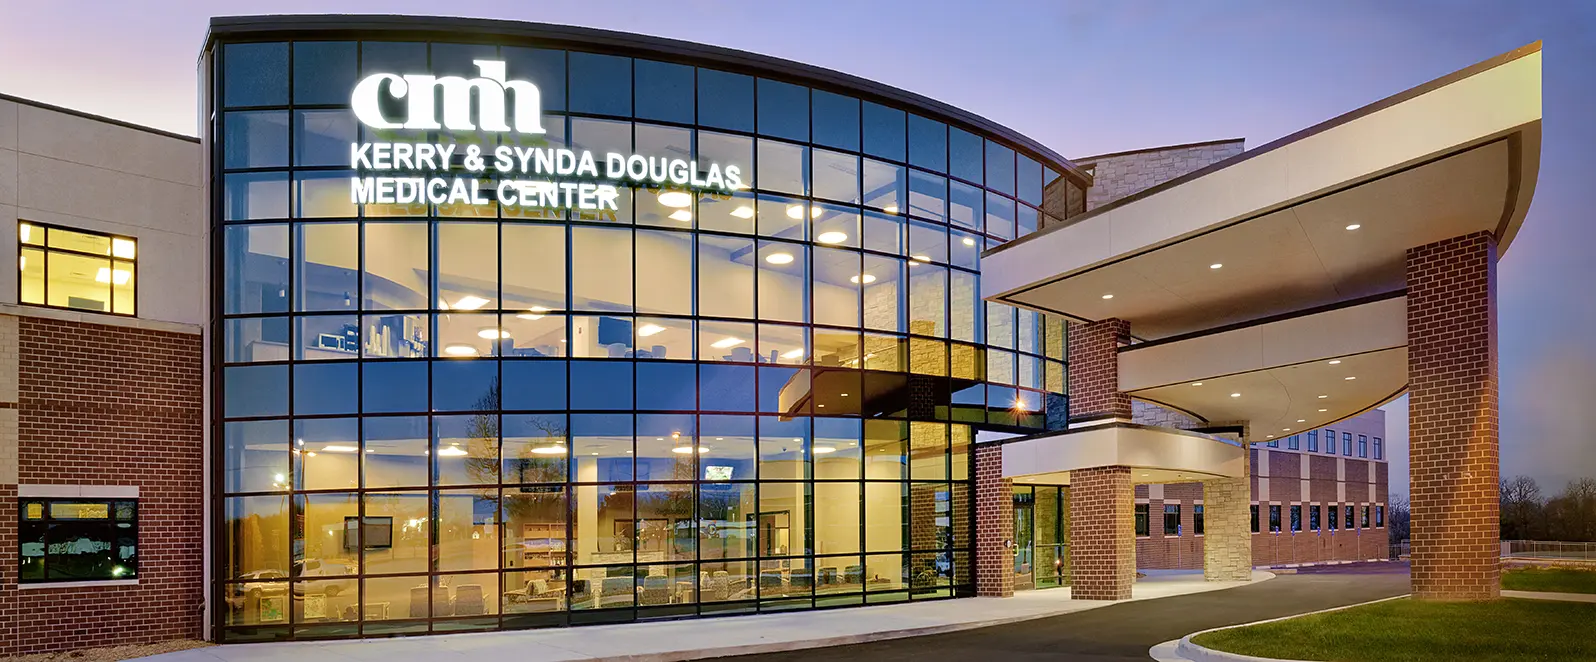 CMH Institute of Pain Management at Douglas Medical Center building exterior